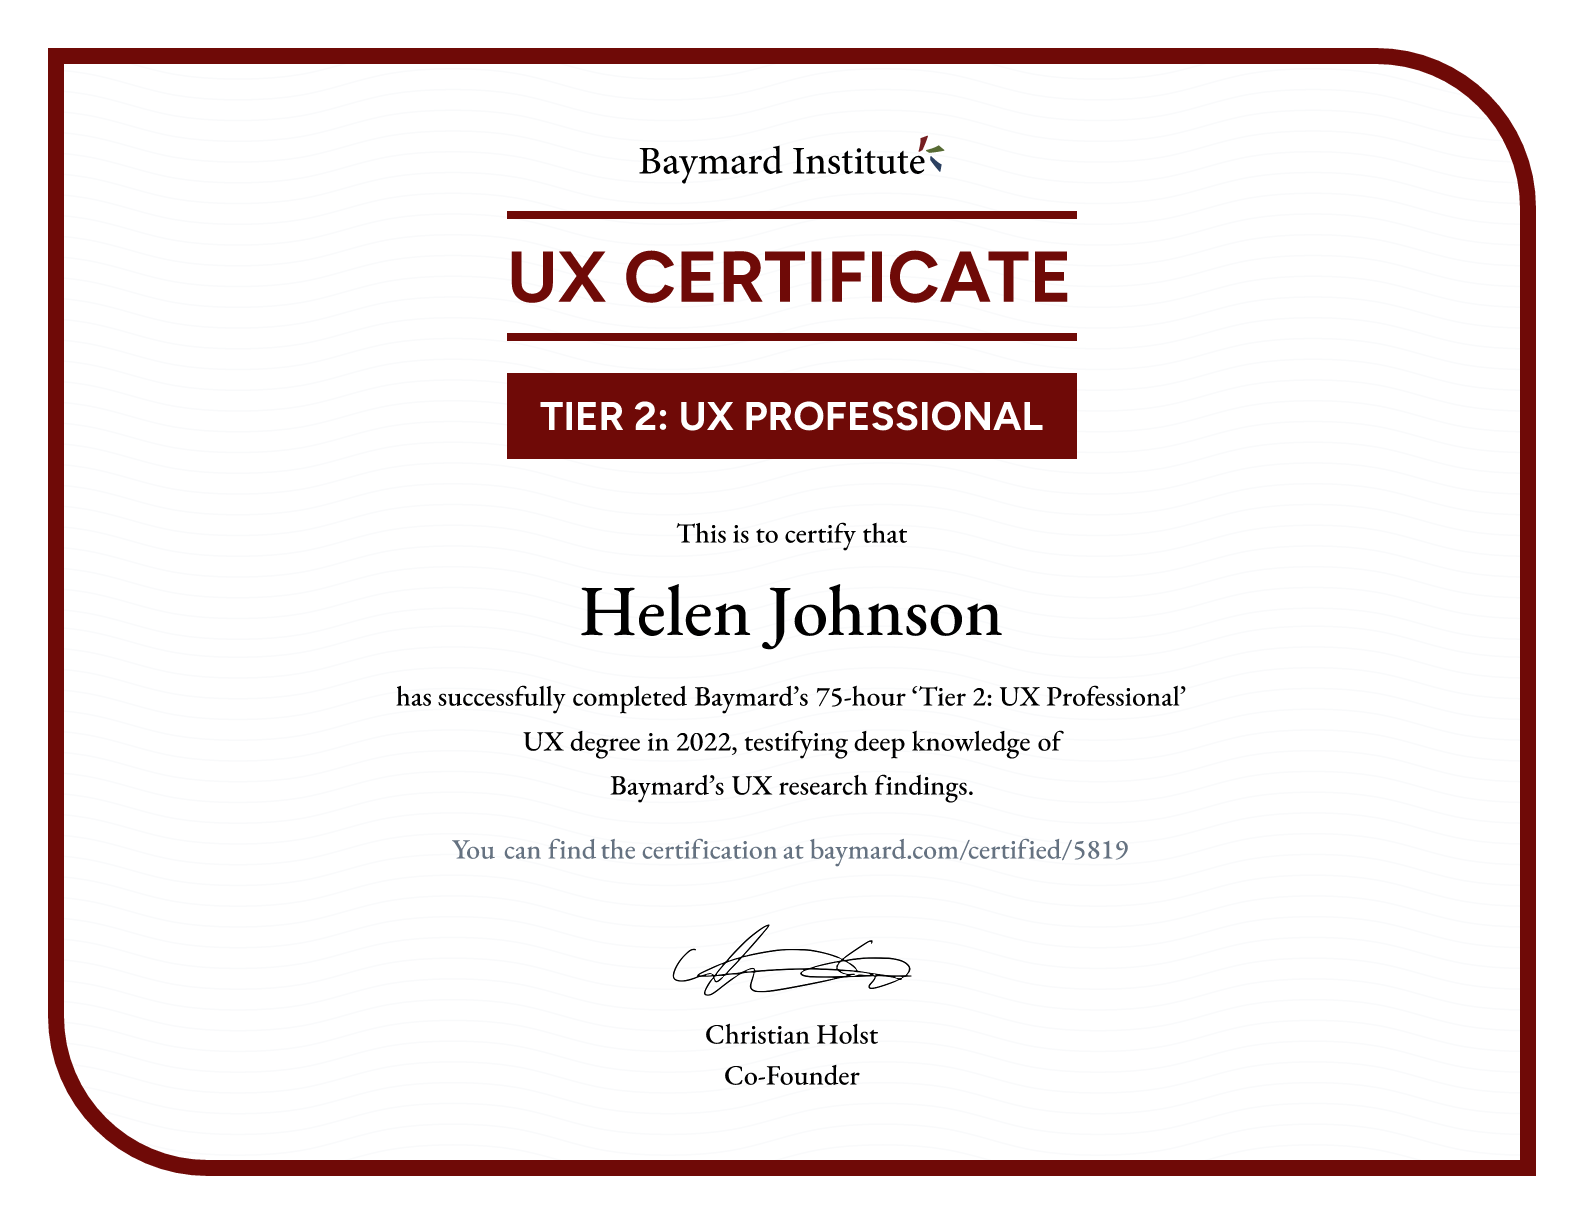 Helen Johnson’s certificate